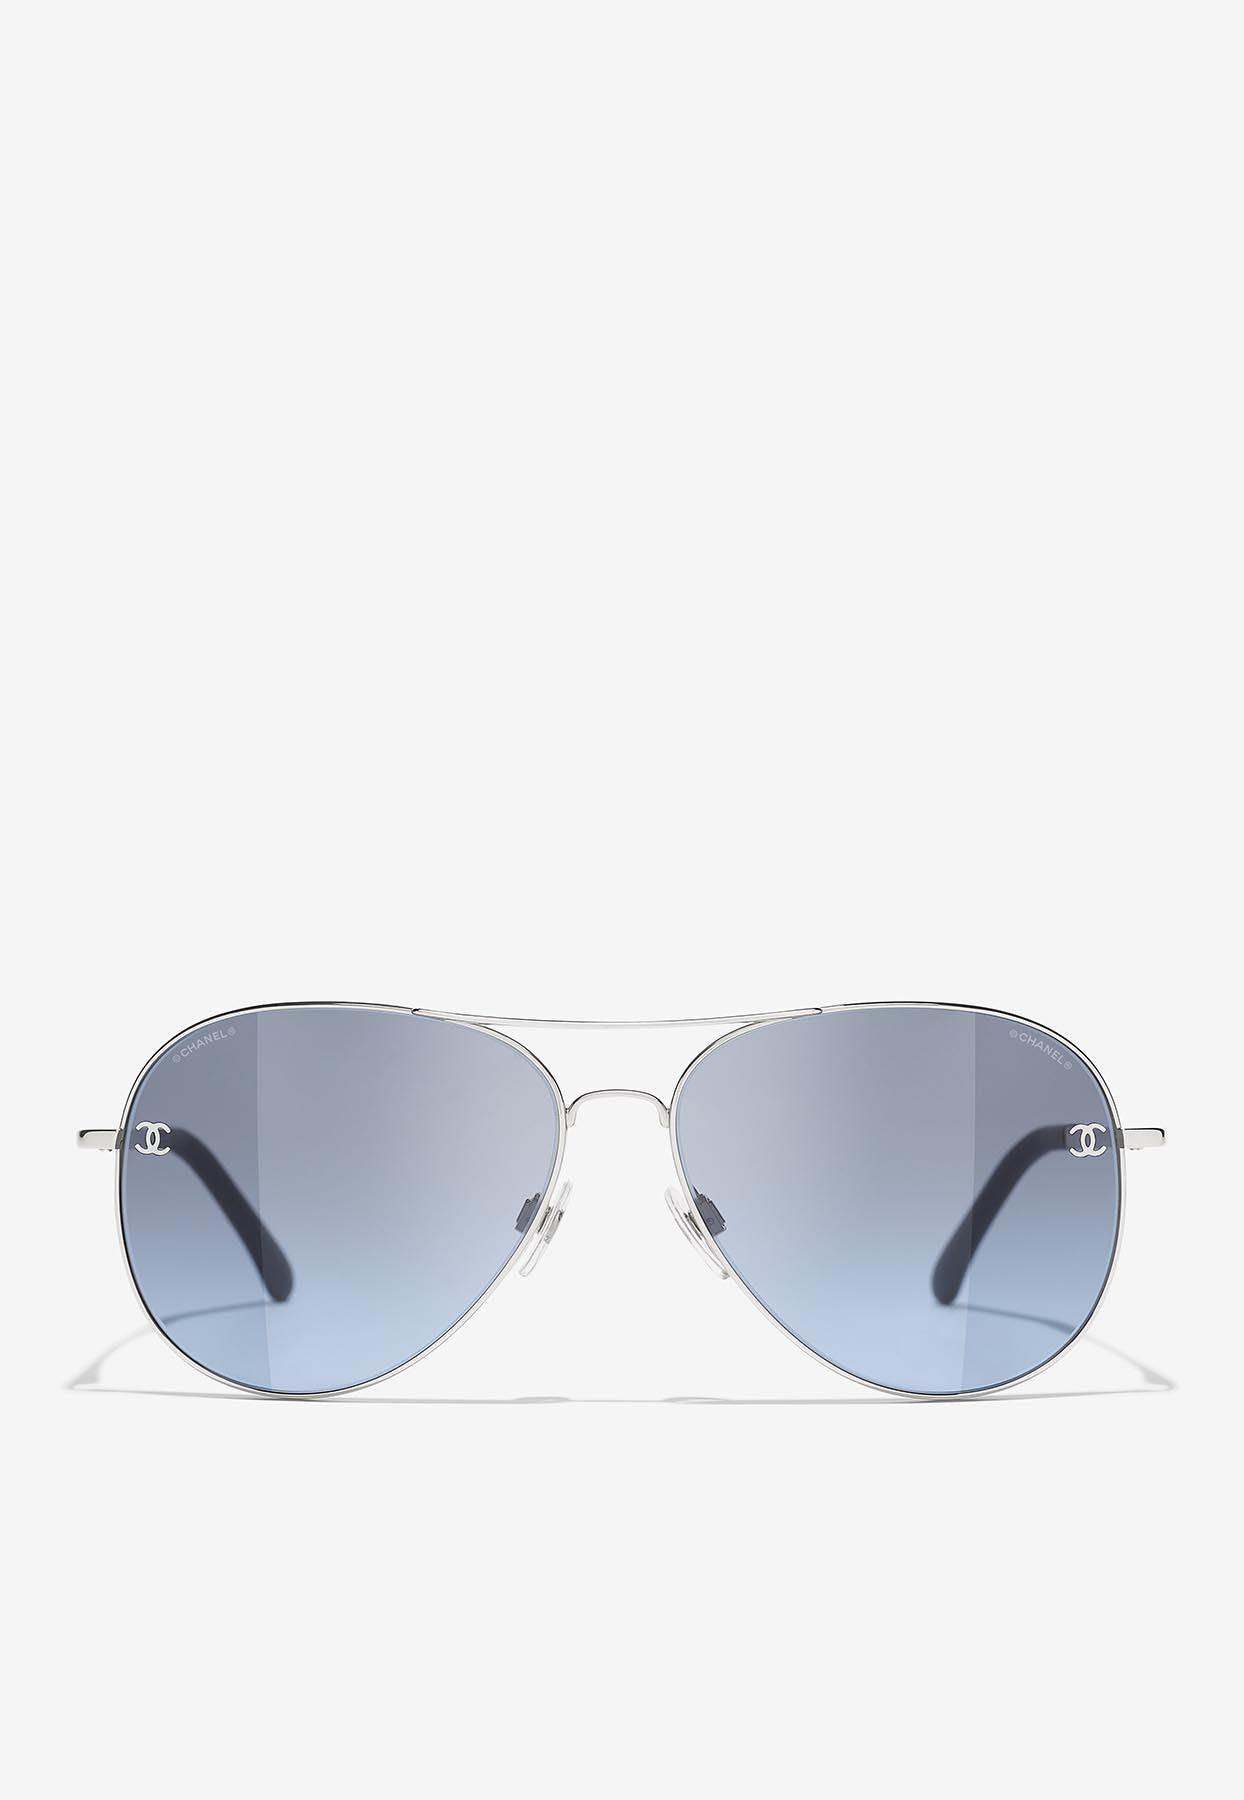 Shop CHANEL Unisex Sunglasses by cocofashion